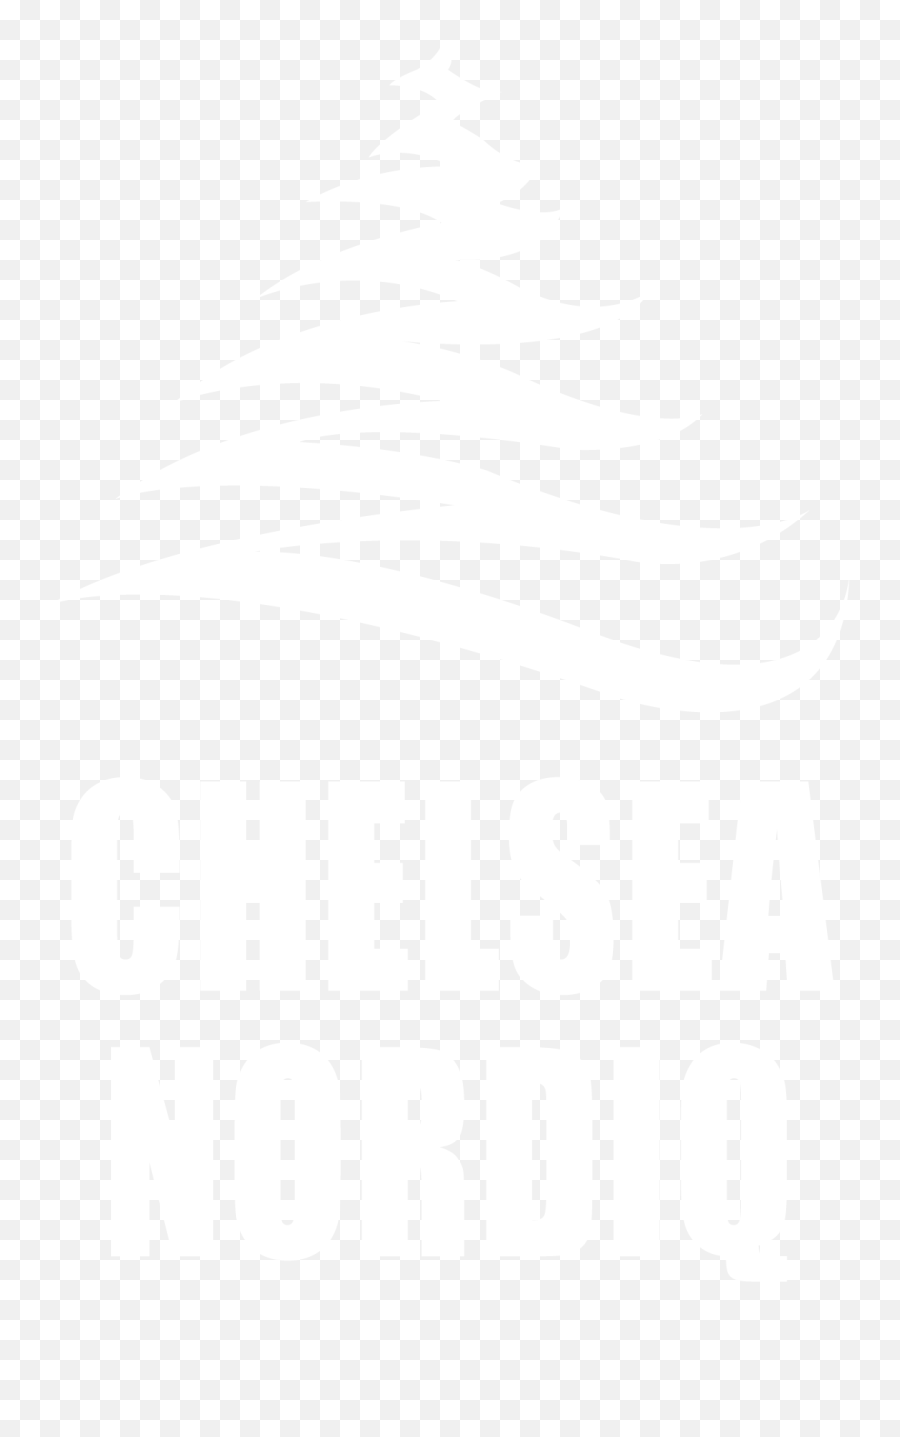 Chelsea Nordiq U2013 A Cross Country Skiing And Biathlon Club - Chelsea Kalah Emoji,Chelsea Logo